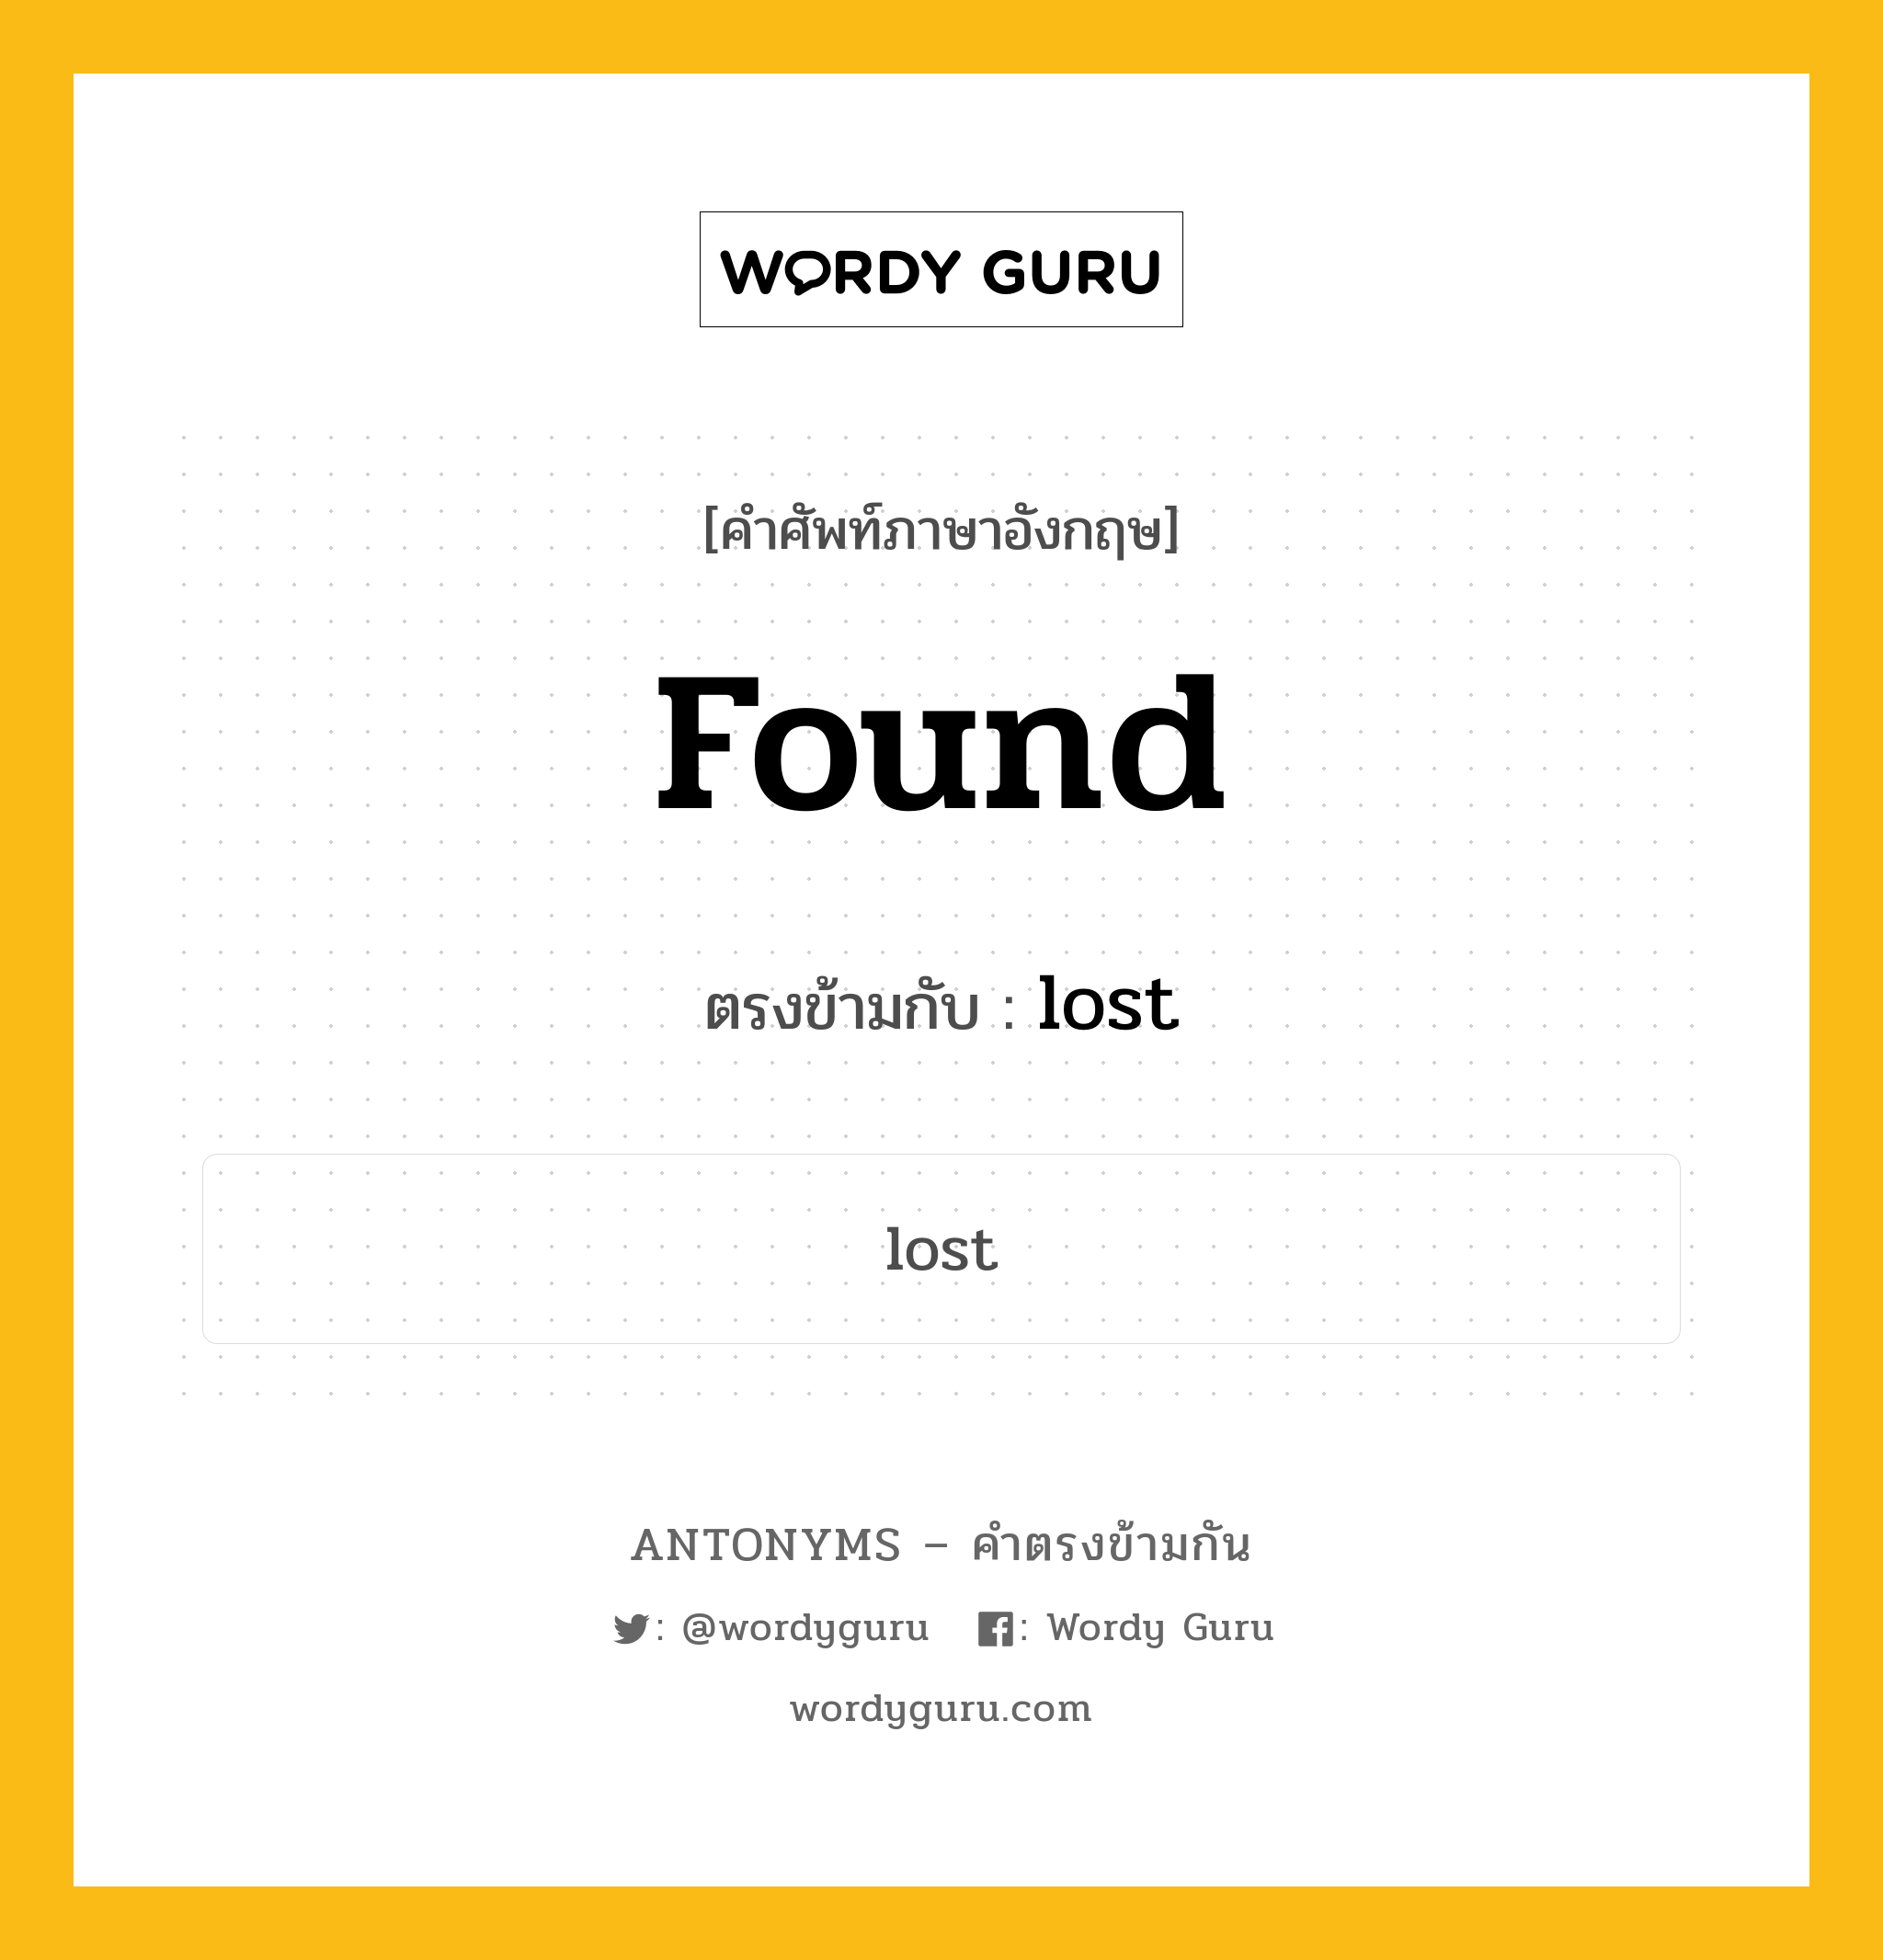 found เป็นคำตรงข้ามกับคำไหนบ้าง?, คำศัพท์ภาษาอังกฤษ found ตรงข้ามกับ lost หมวด lost